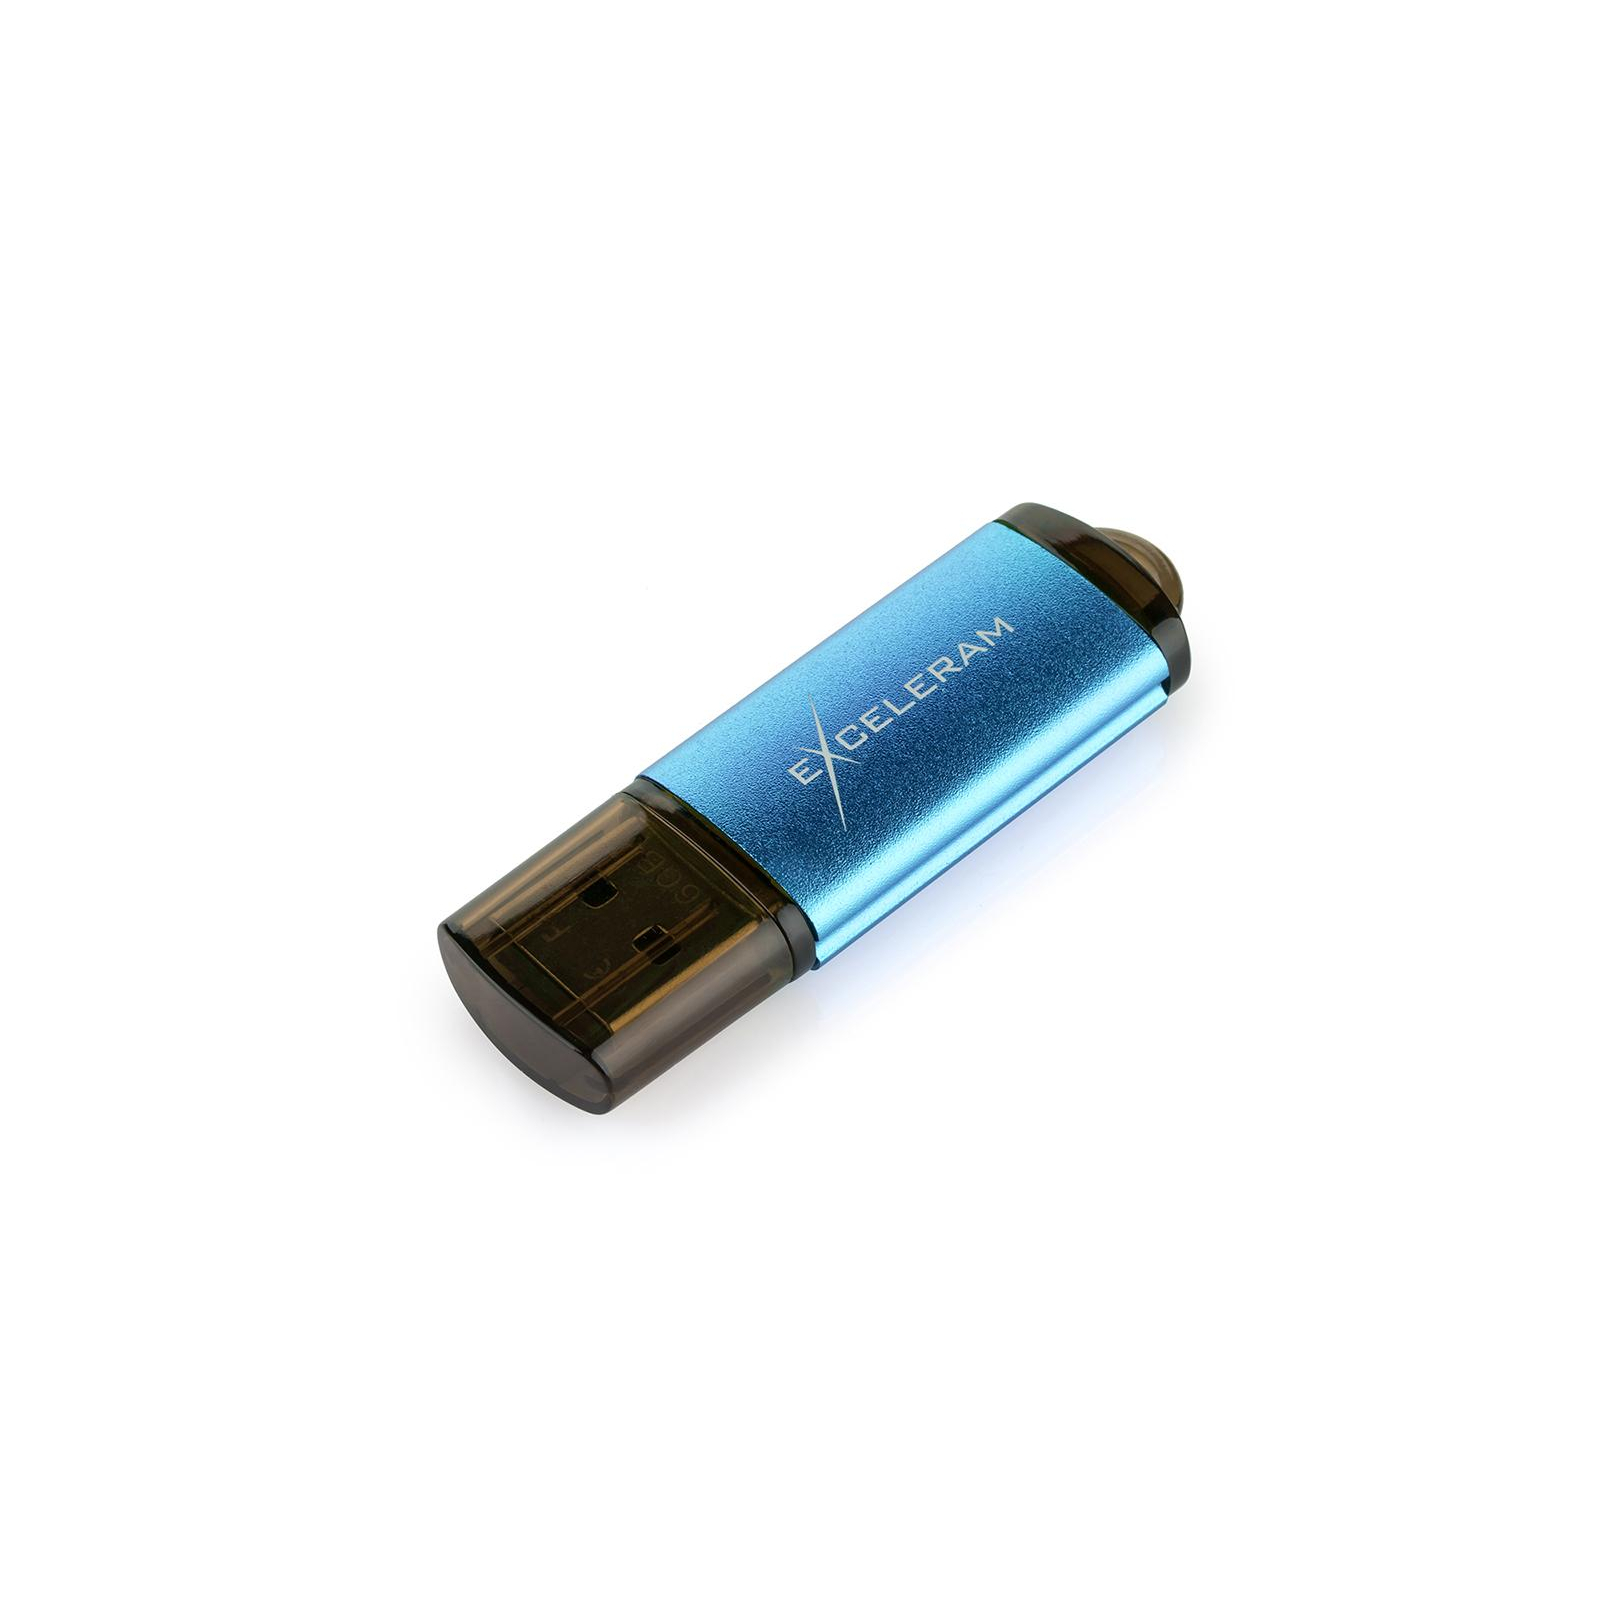 USB флеш накопитель eXceleram 8GB A3 Series Purple USB 2.0 (EXA3U2PU08) изображение 3